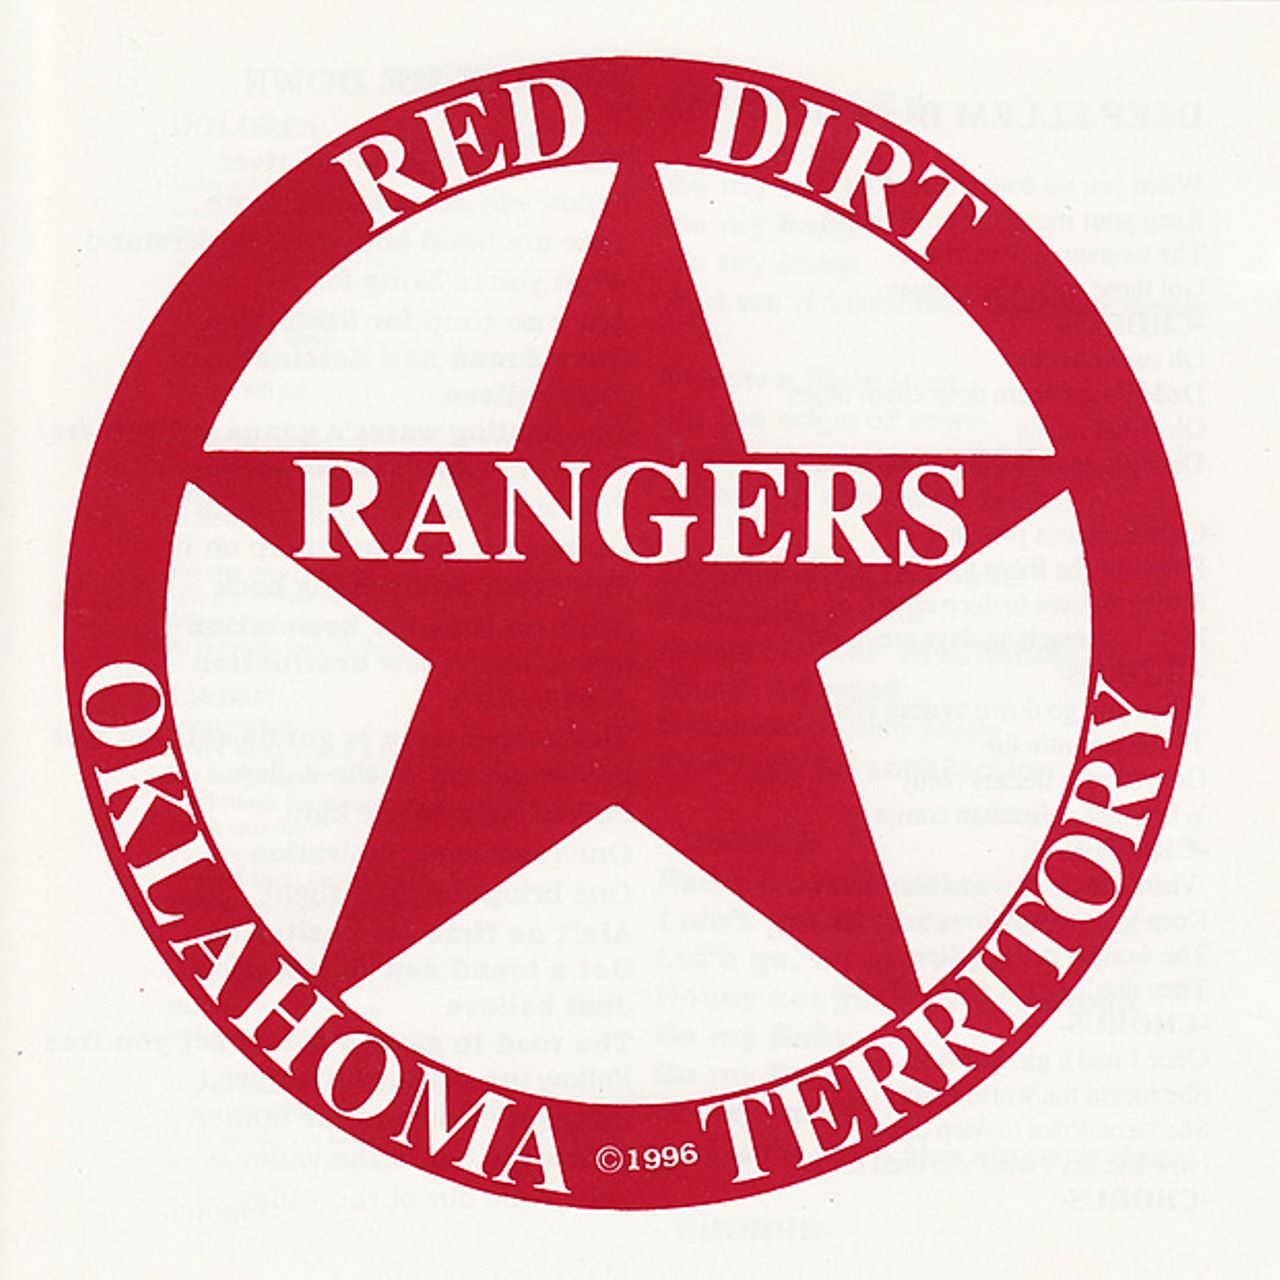 Red Dirt Rangers - Oklahoma Territory cover album